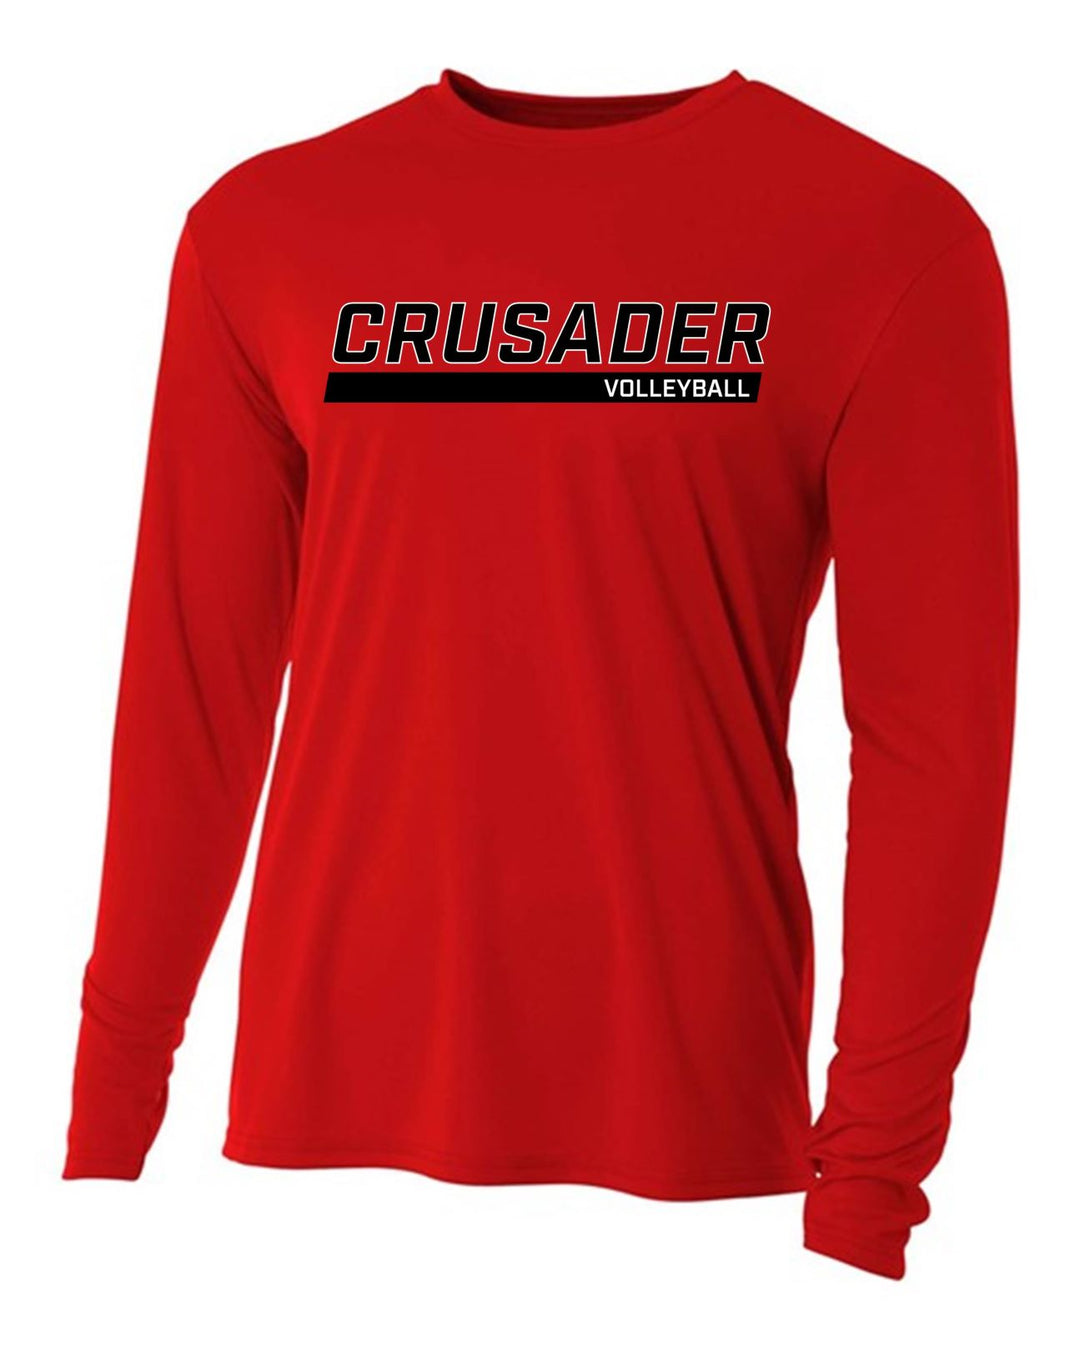 WCU Volleyball Men's Long-Sleeve Performance Shirt WCU Volleyball Red CRUSADER - Third Coast Soccer